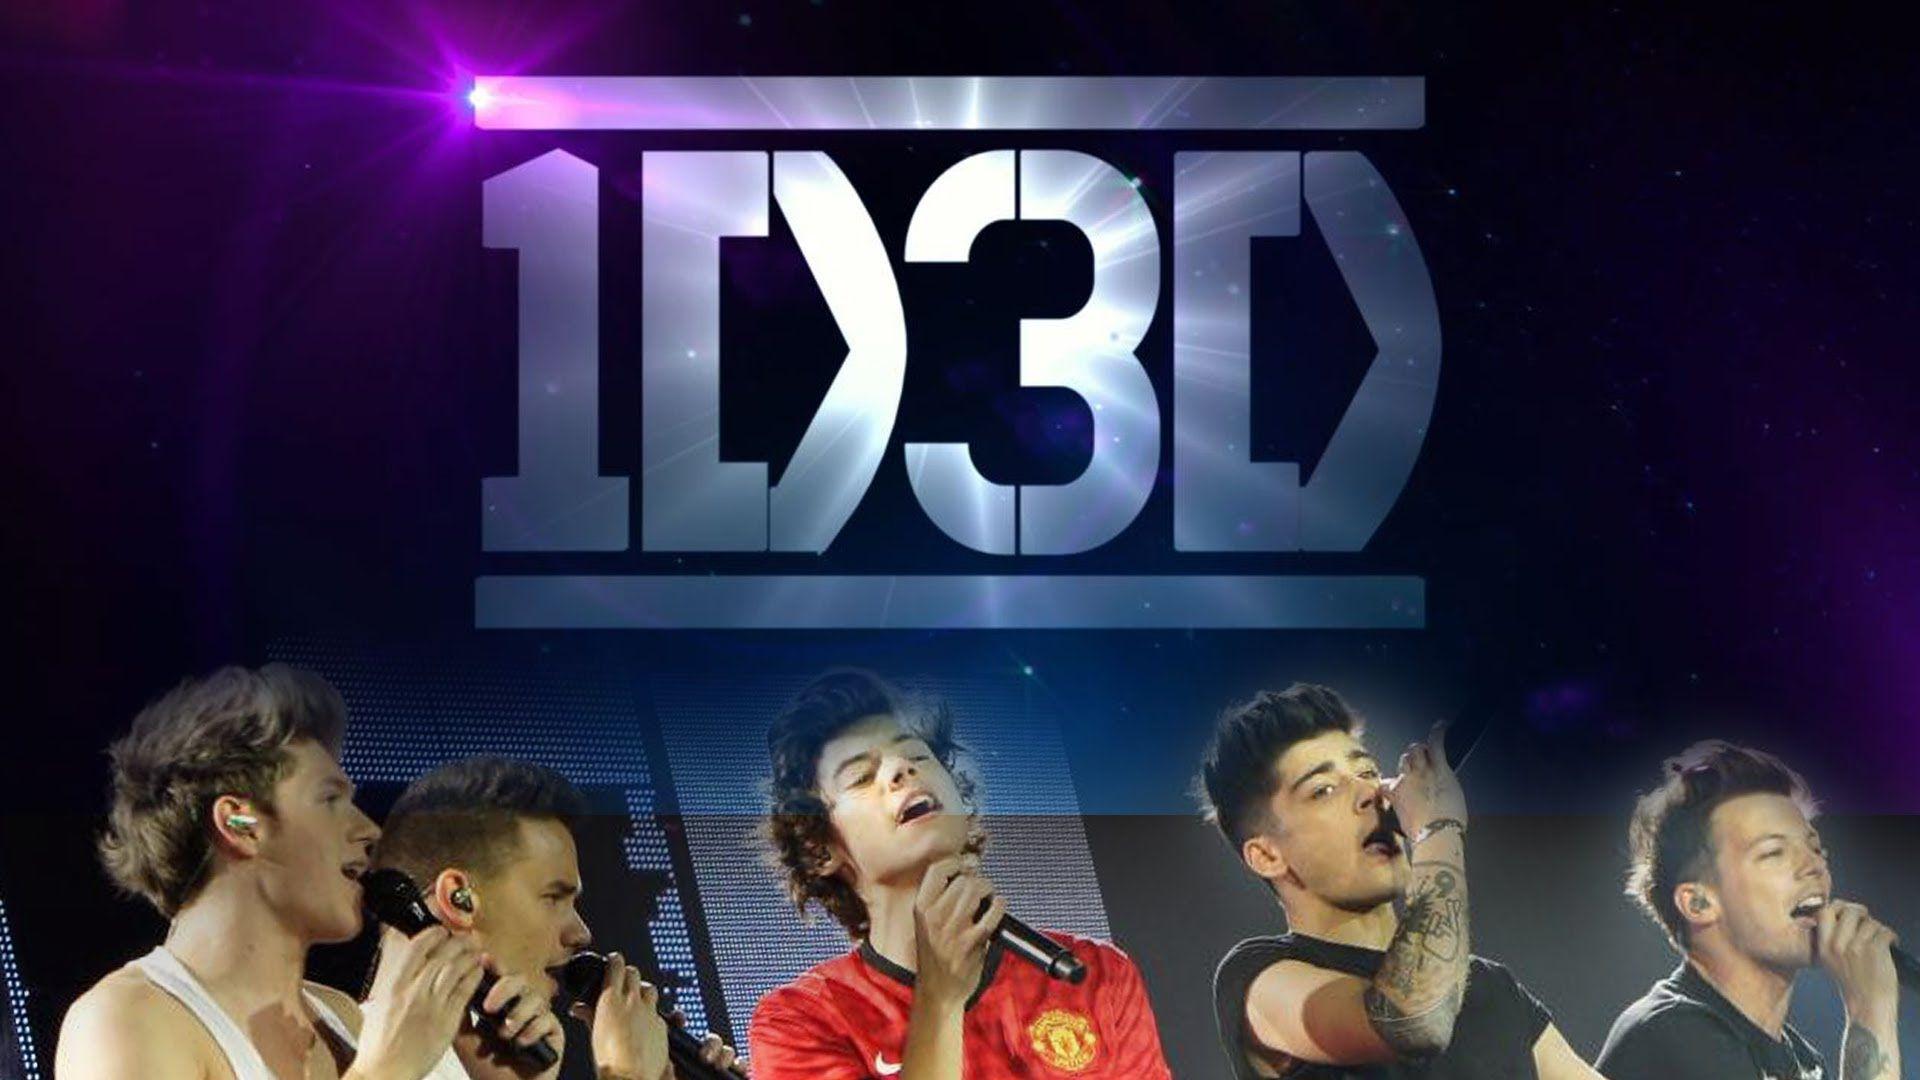 One Direction "This Is Us", Título de Película 3D!